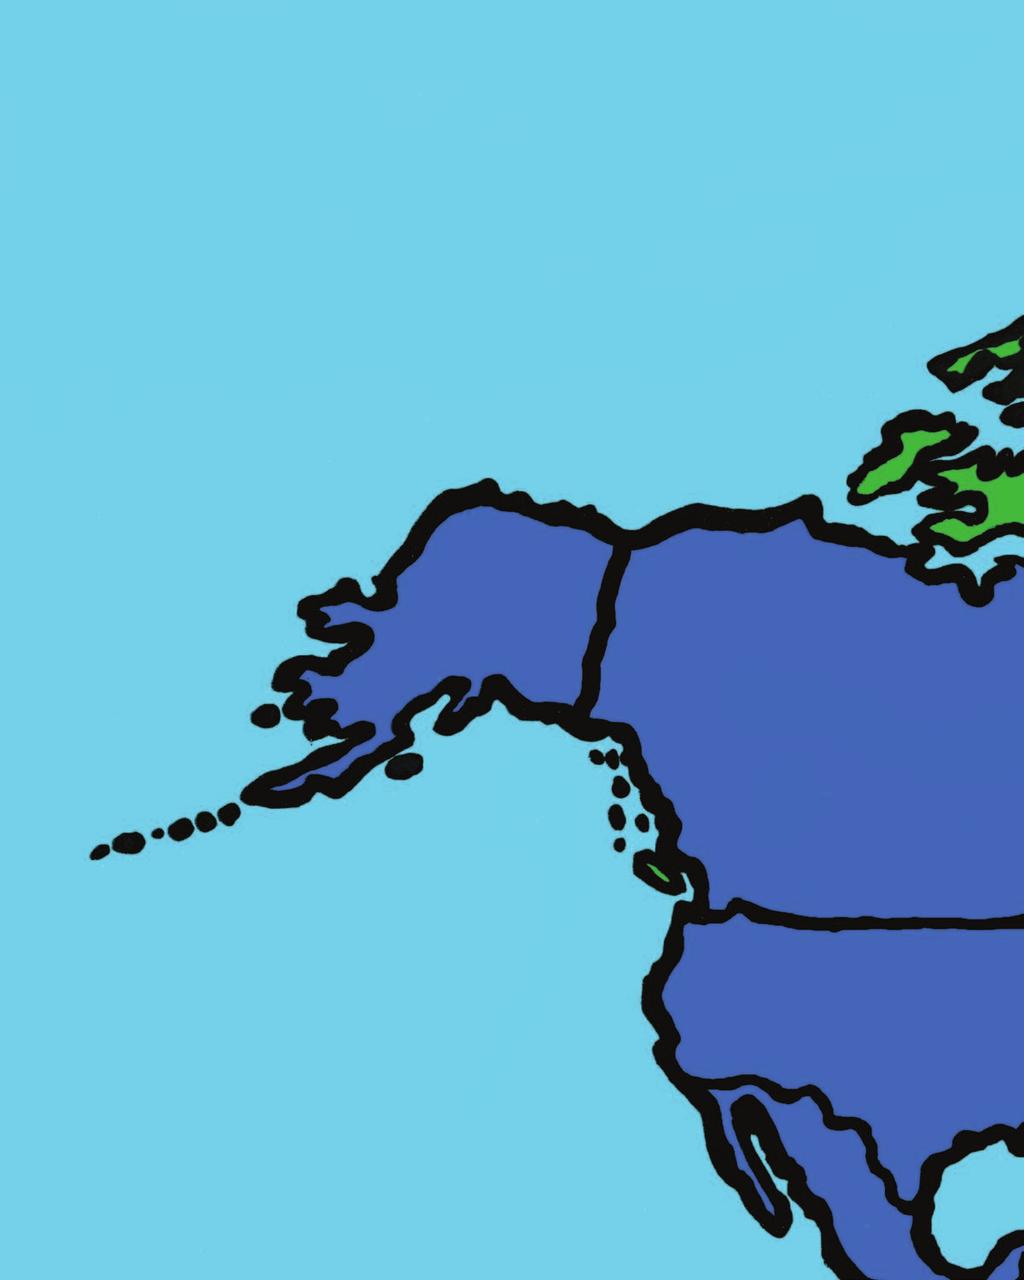 ALASKA CANADA NORTH PACIFIC OCEAN UNITED STATES OF AMERICA World Map GGFM (July 24) 1 2011